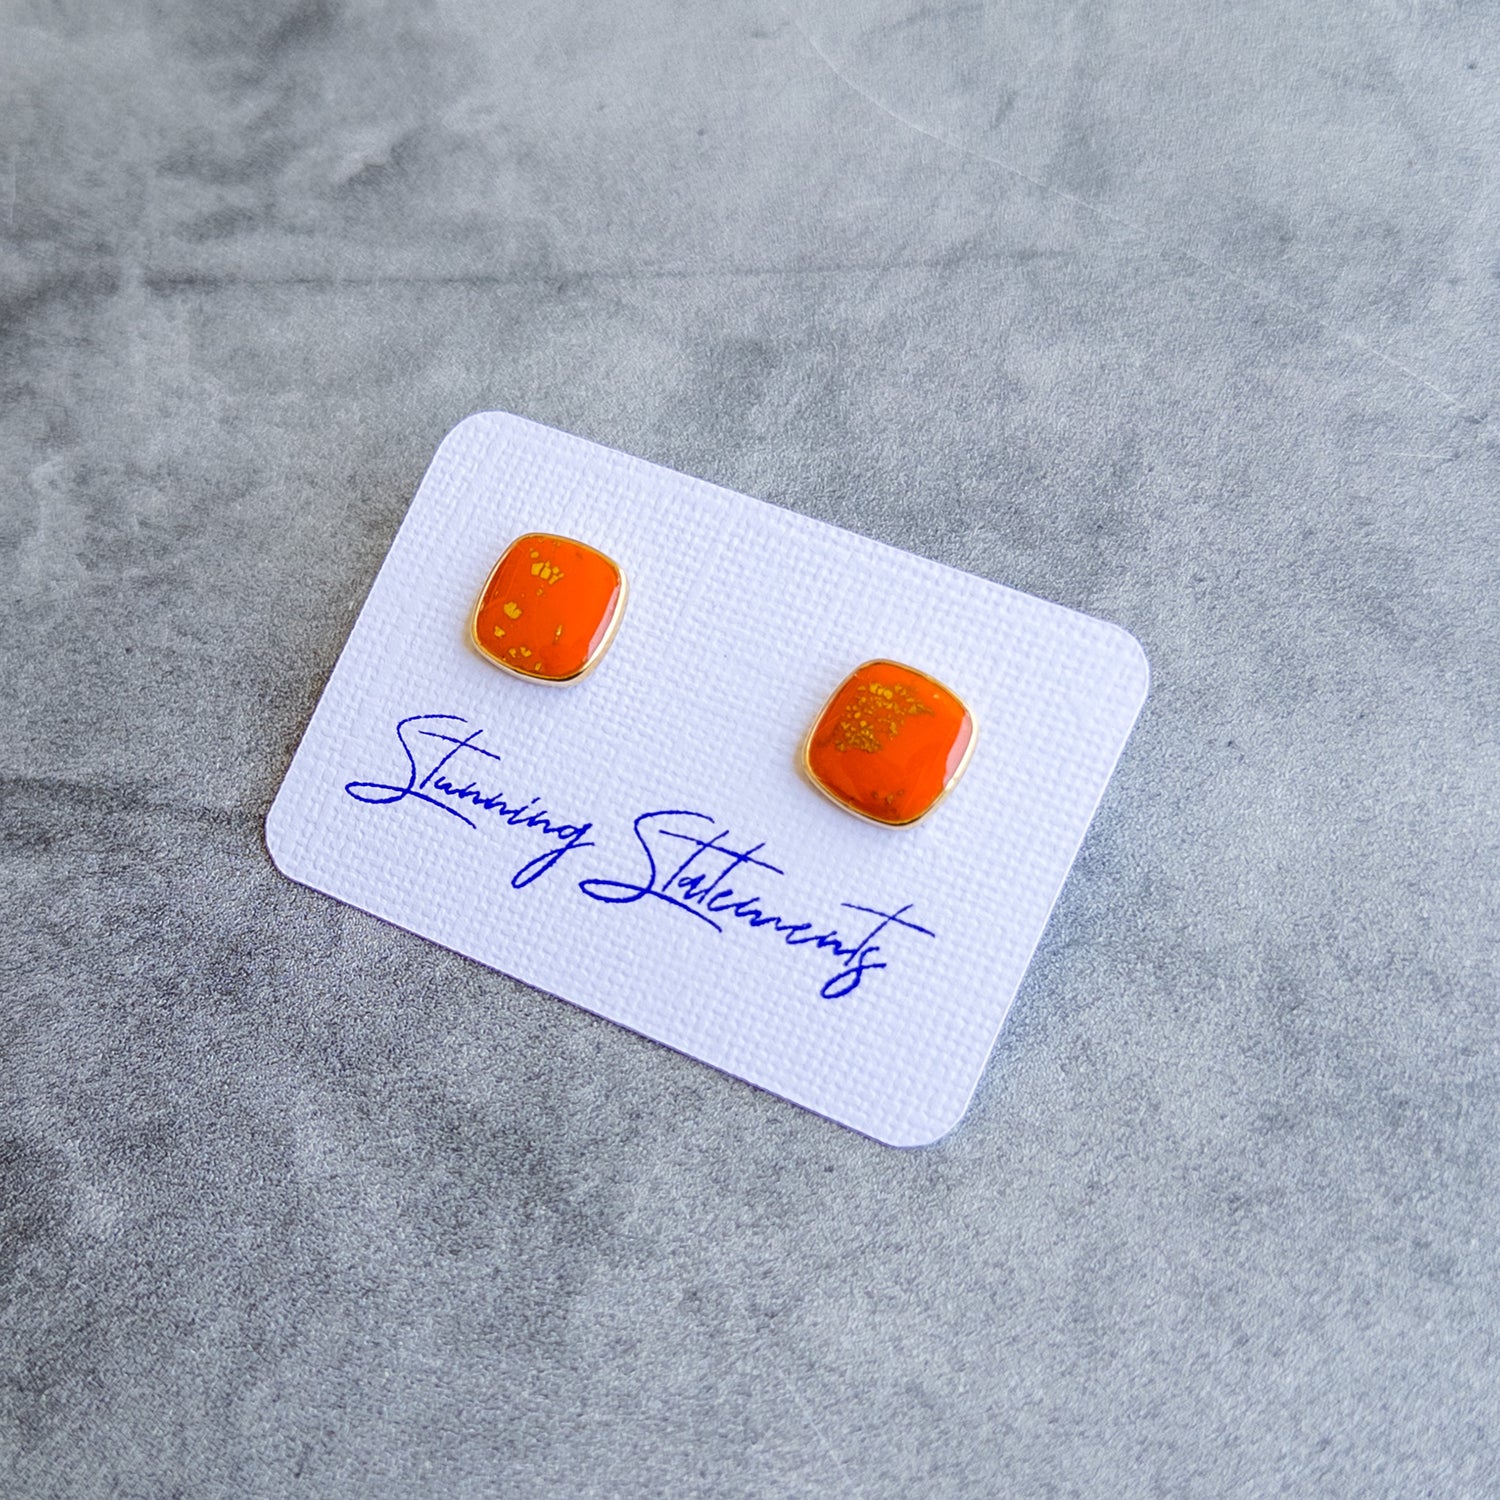 stunning statements office work professional simple square clay orange juliette stud earrings